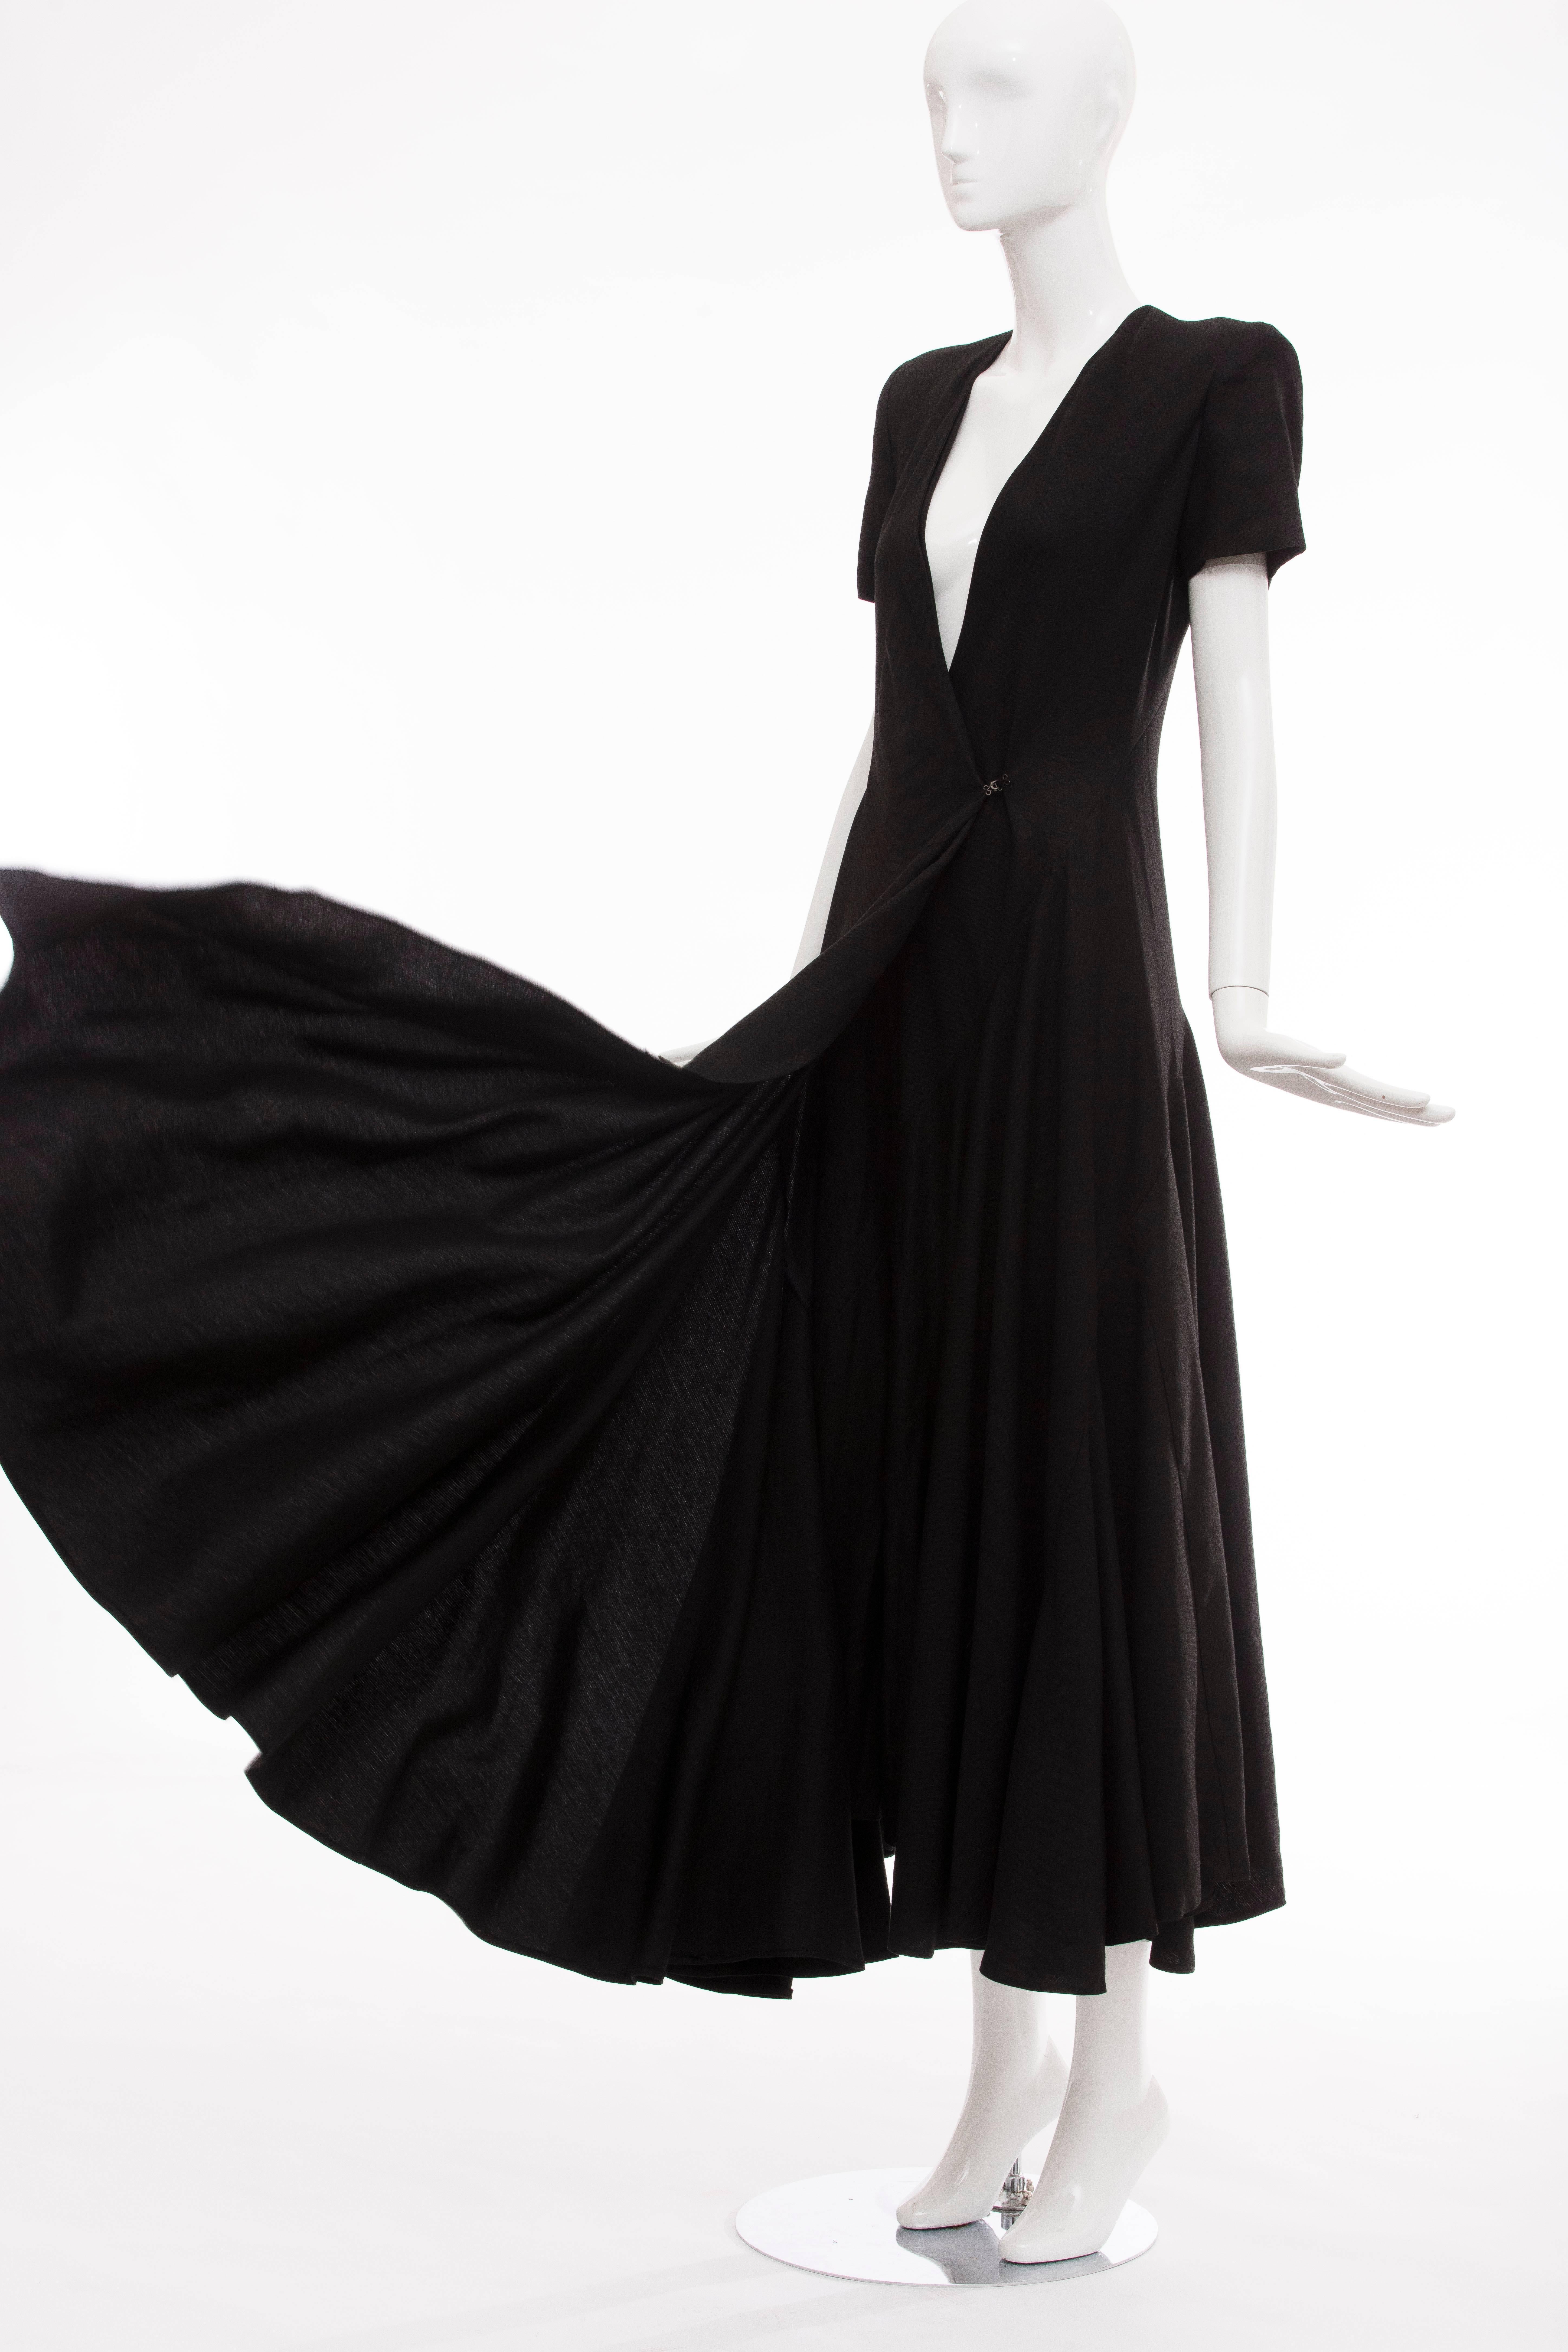 Olivier Theyskens Runway Black Linen Acetate Short Sleeve Dress, Spring 1999 3